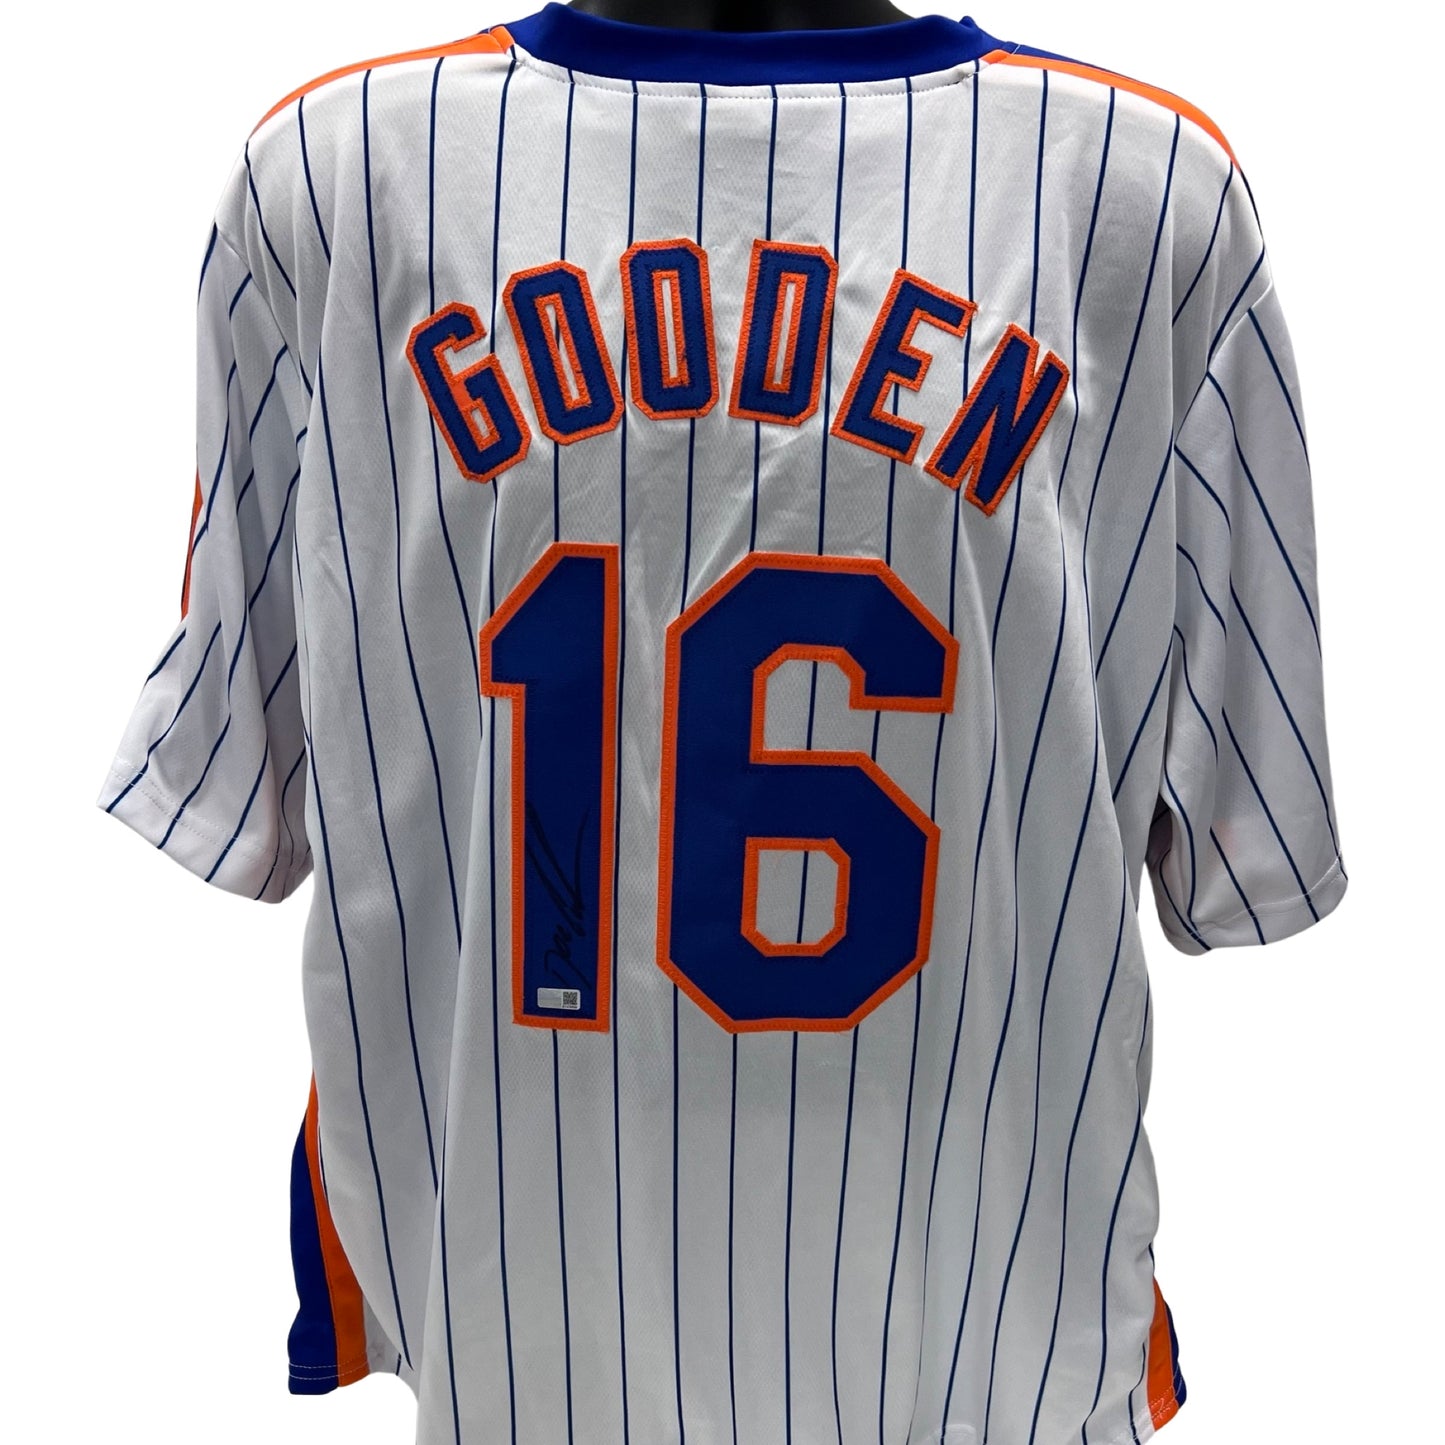 Doc Gooden Autographed New York Mets Pinstripe Jersey Steiner CX